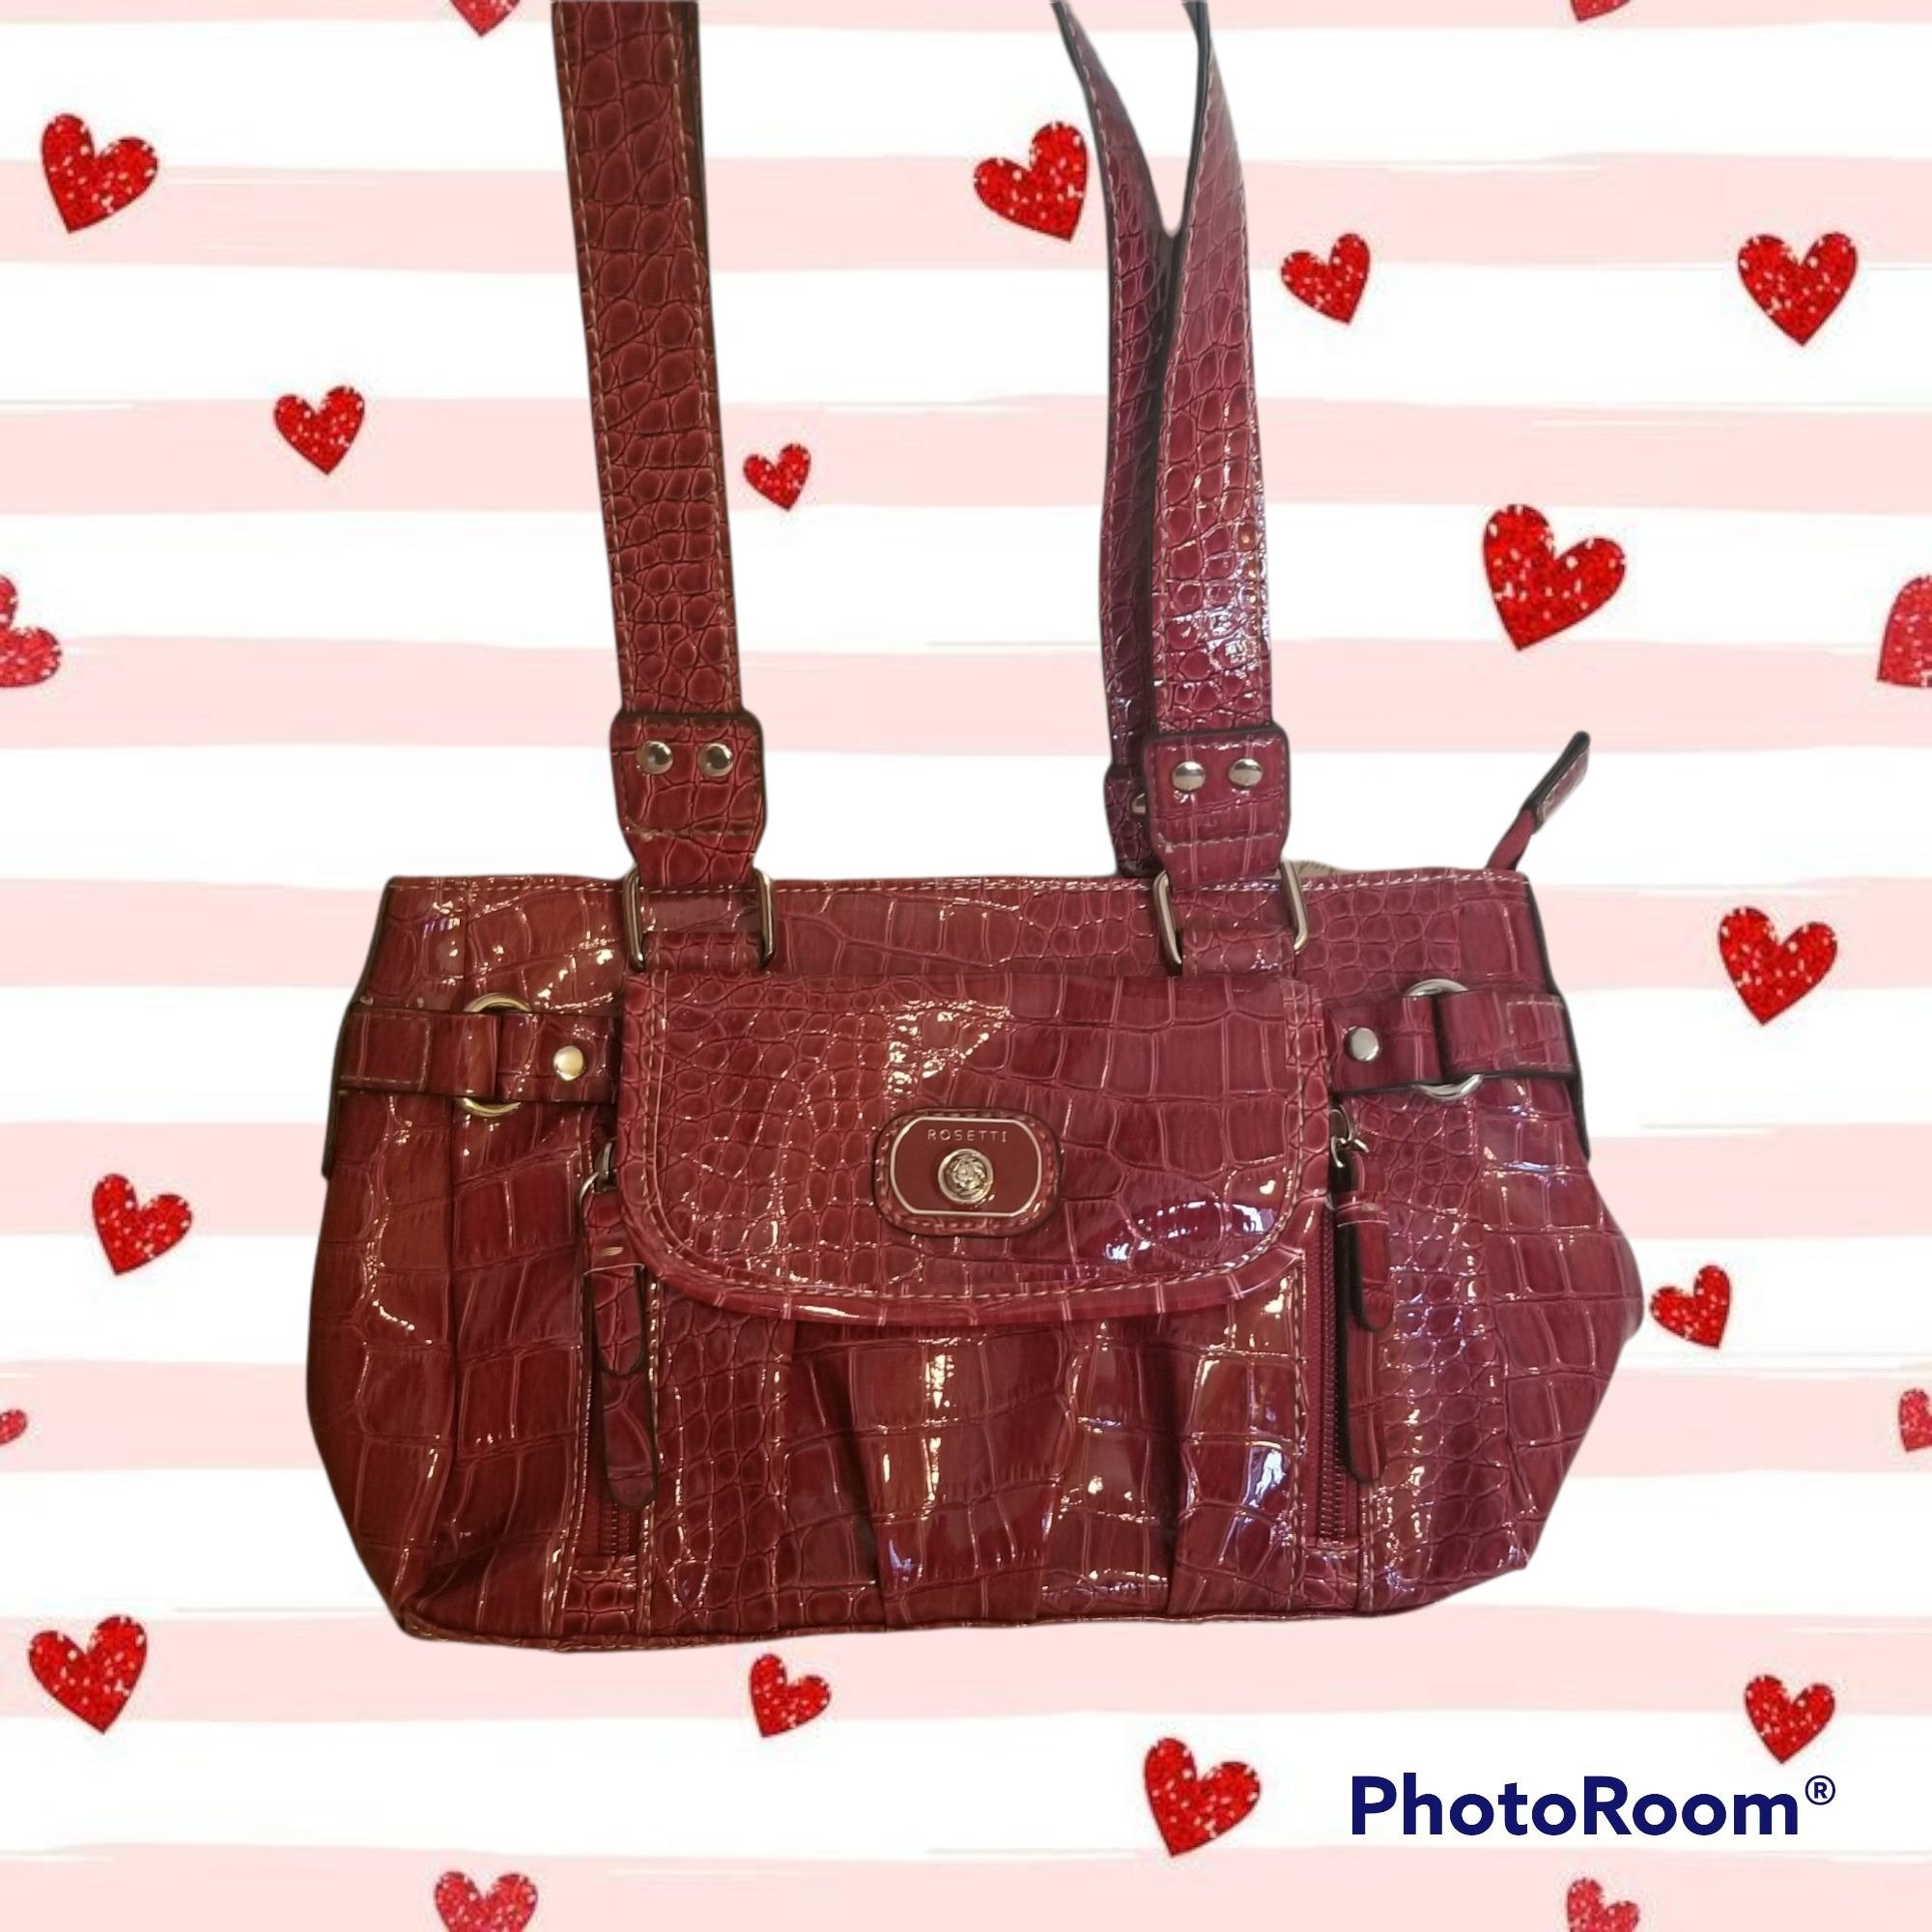 Vintage Rosetti Purse/Handbag - Brown Leather - With Strap | eBay